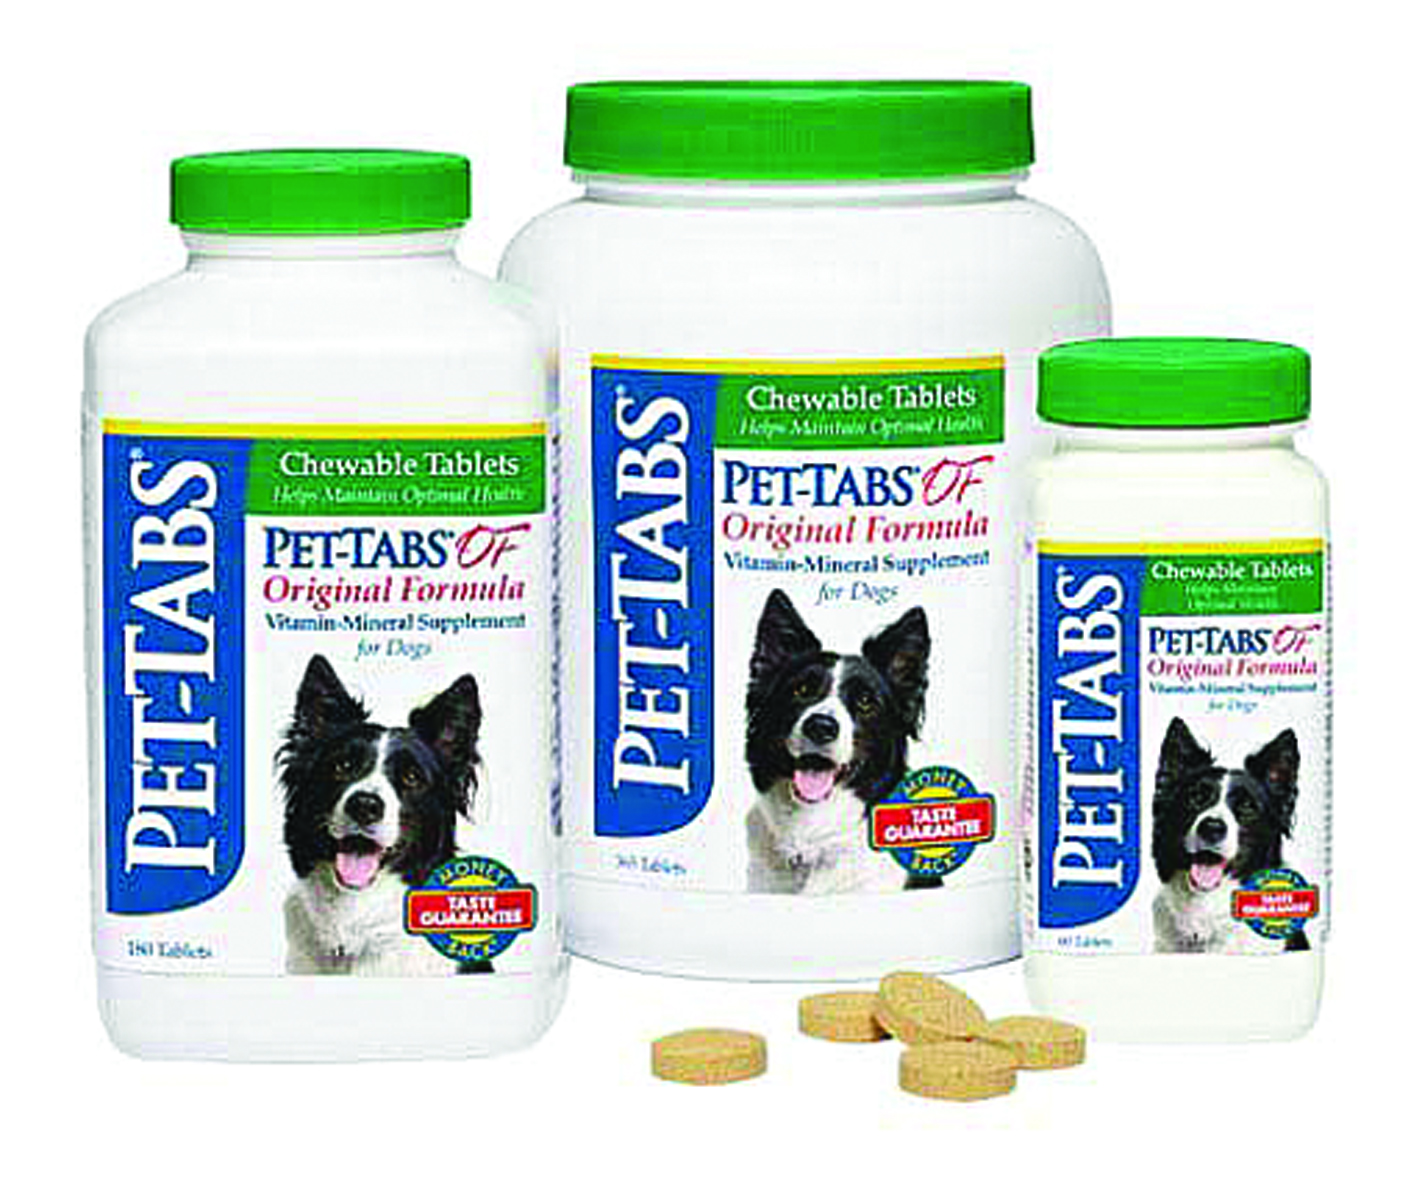 Pet-Tabs Vitamins & Supplements - 180 Tablets